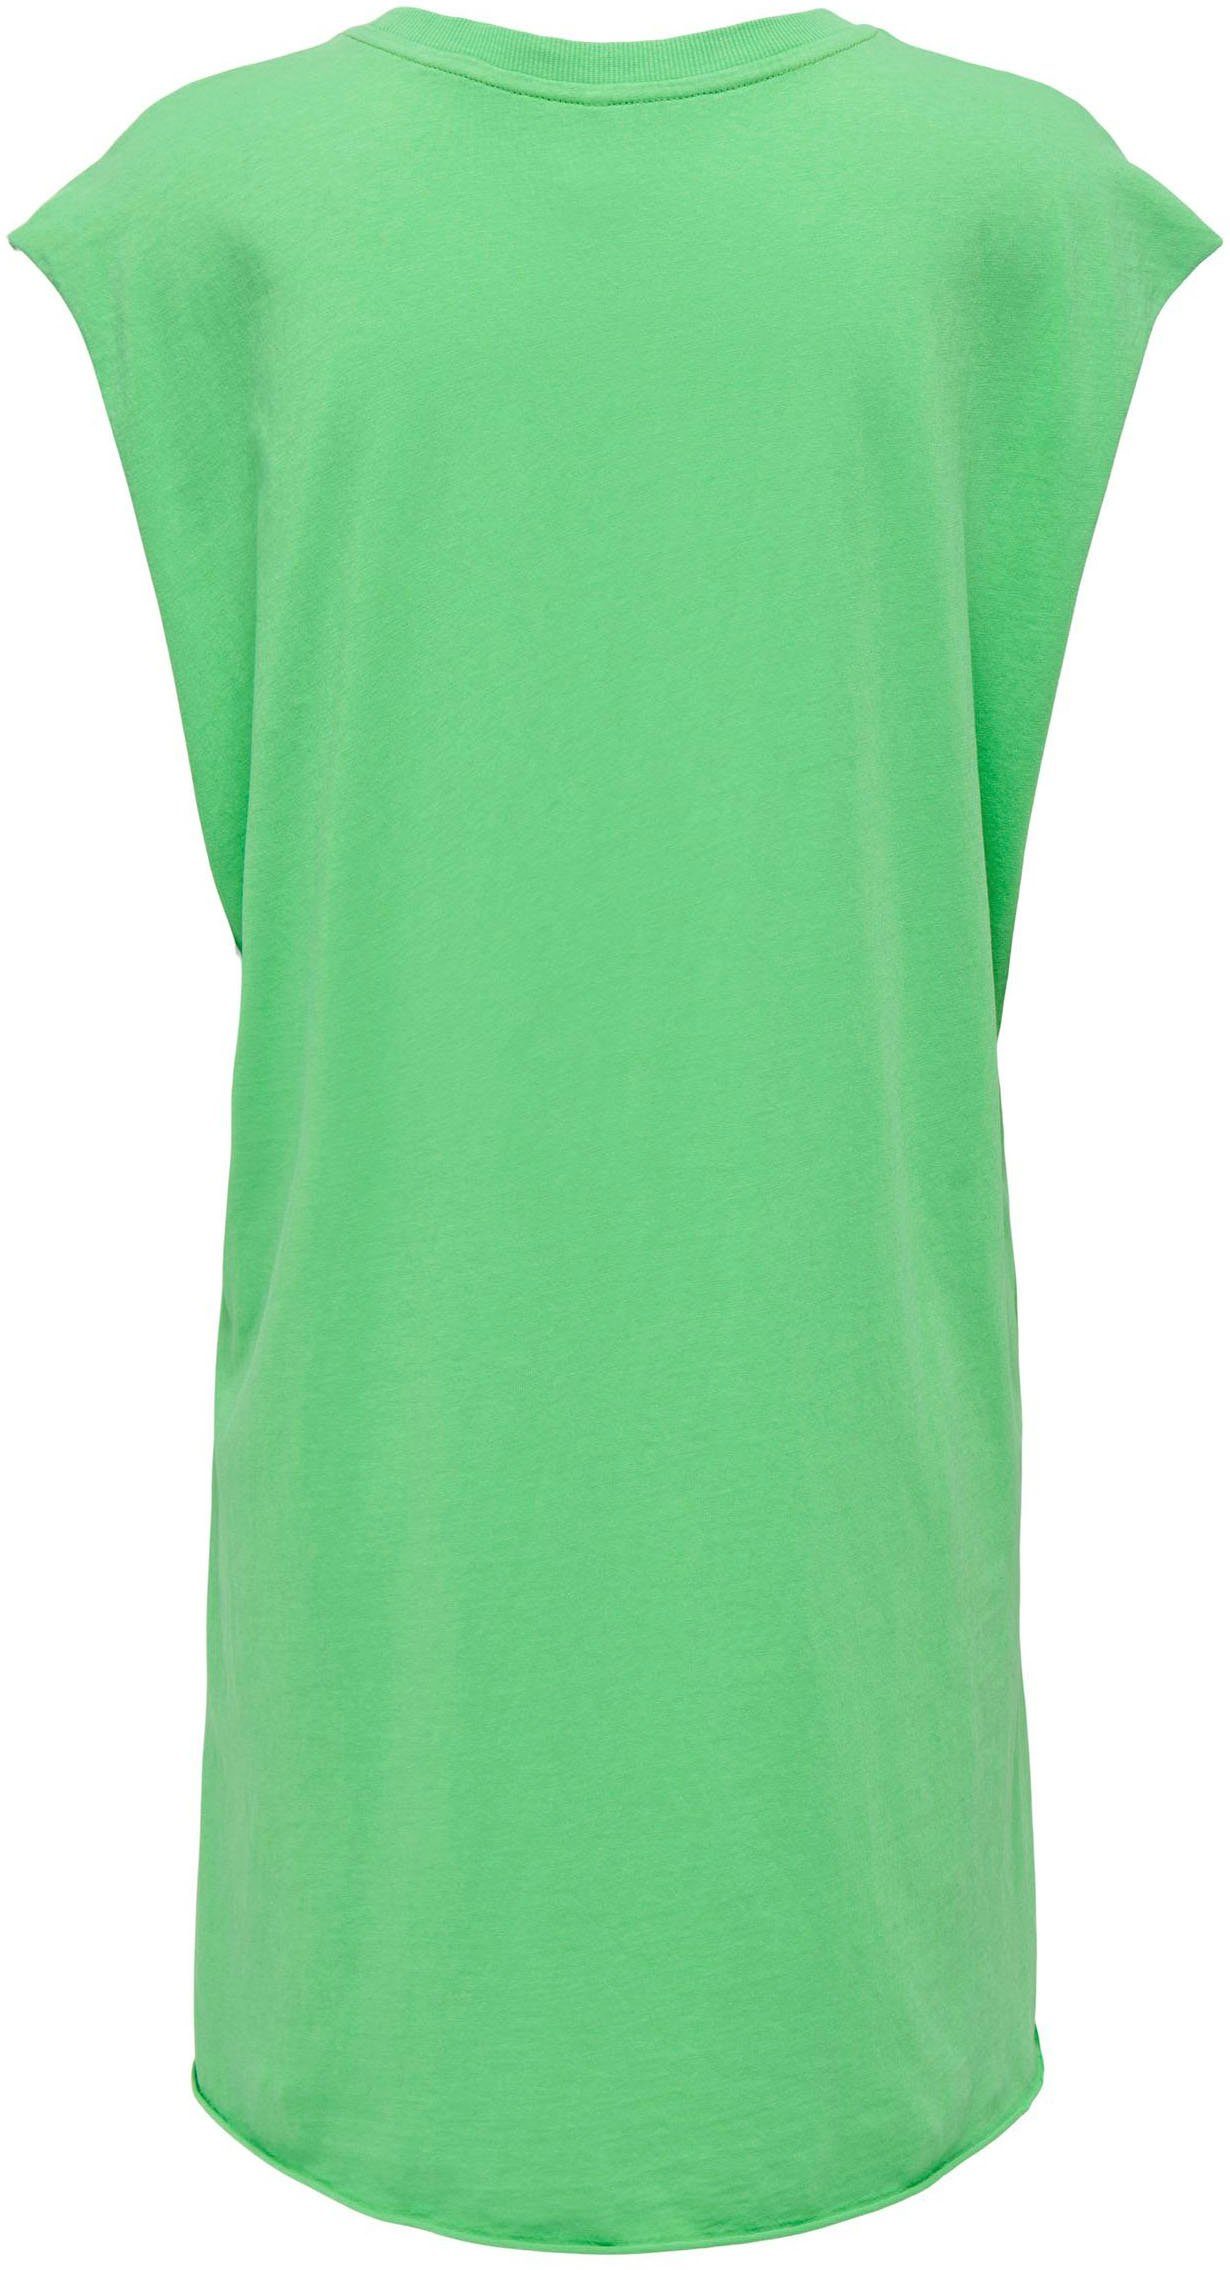 ONLLUCY S/L Vibrant Shirtkleid BOX JRS ONLY DRESS Print:Sunset PALMS Green